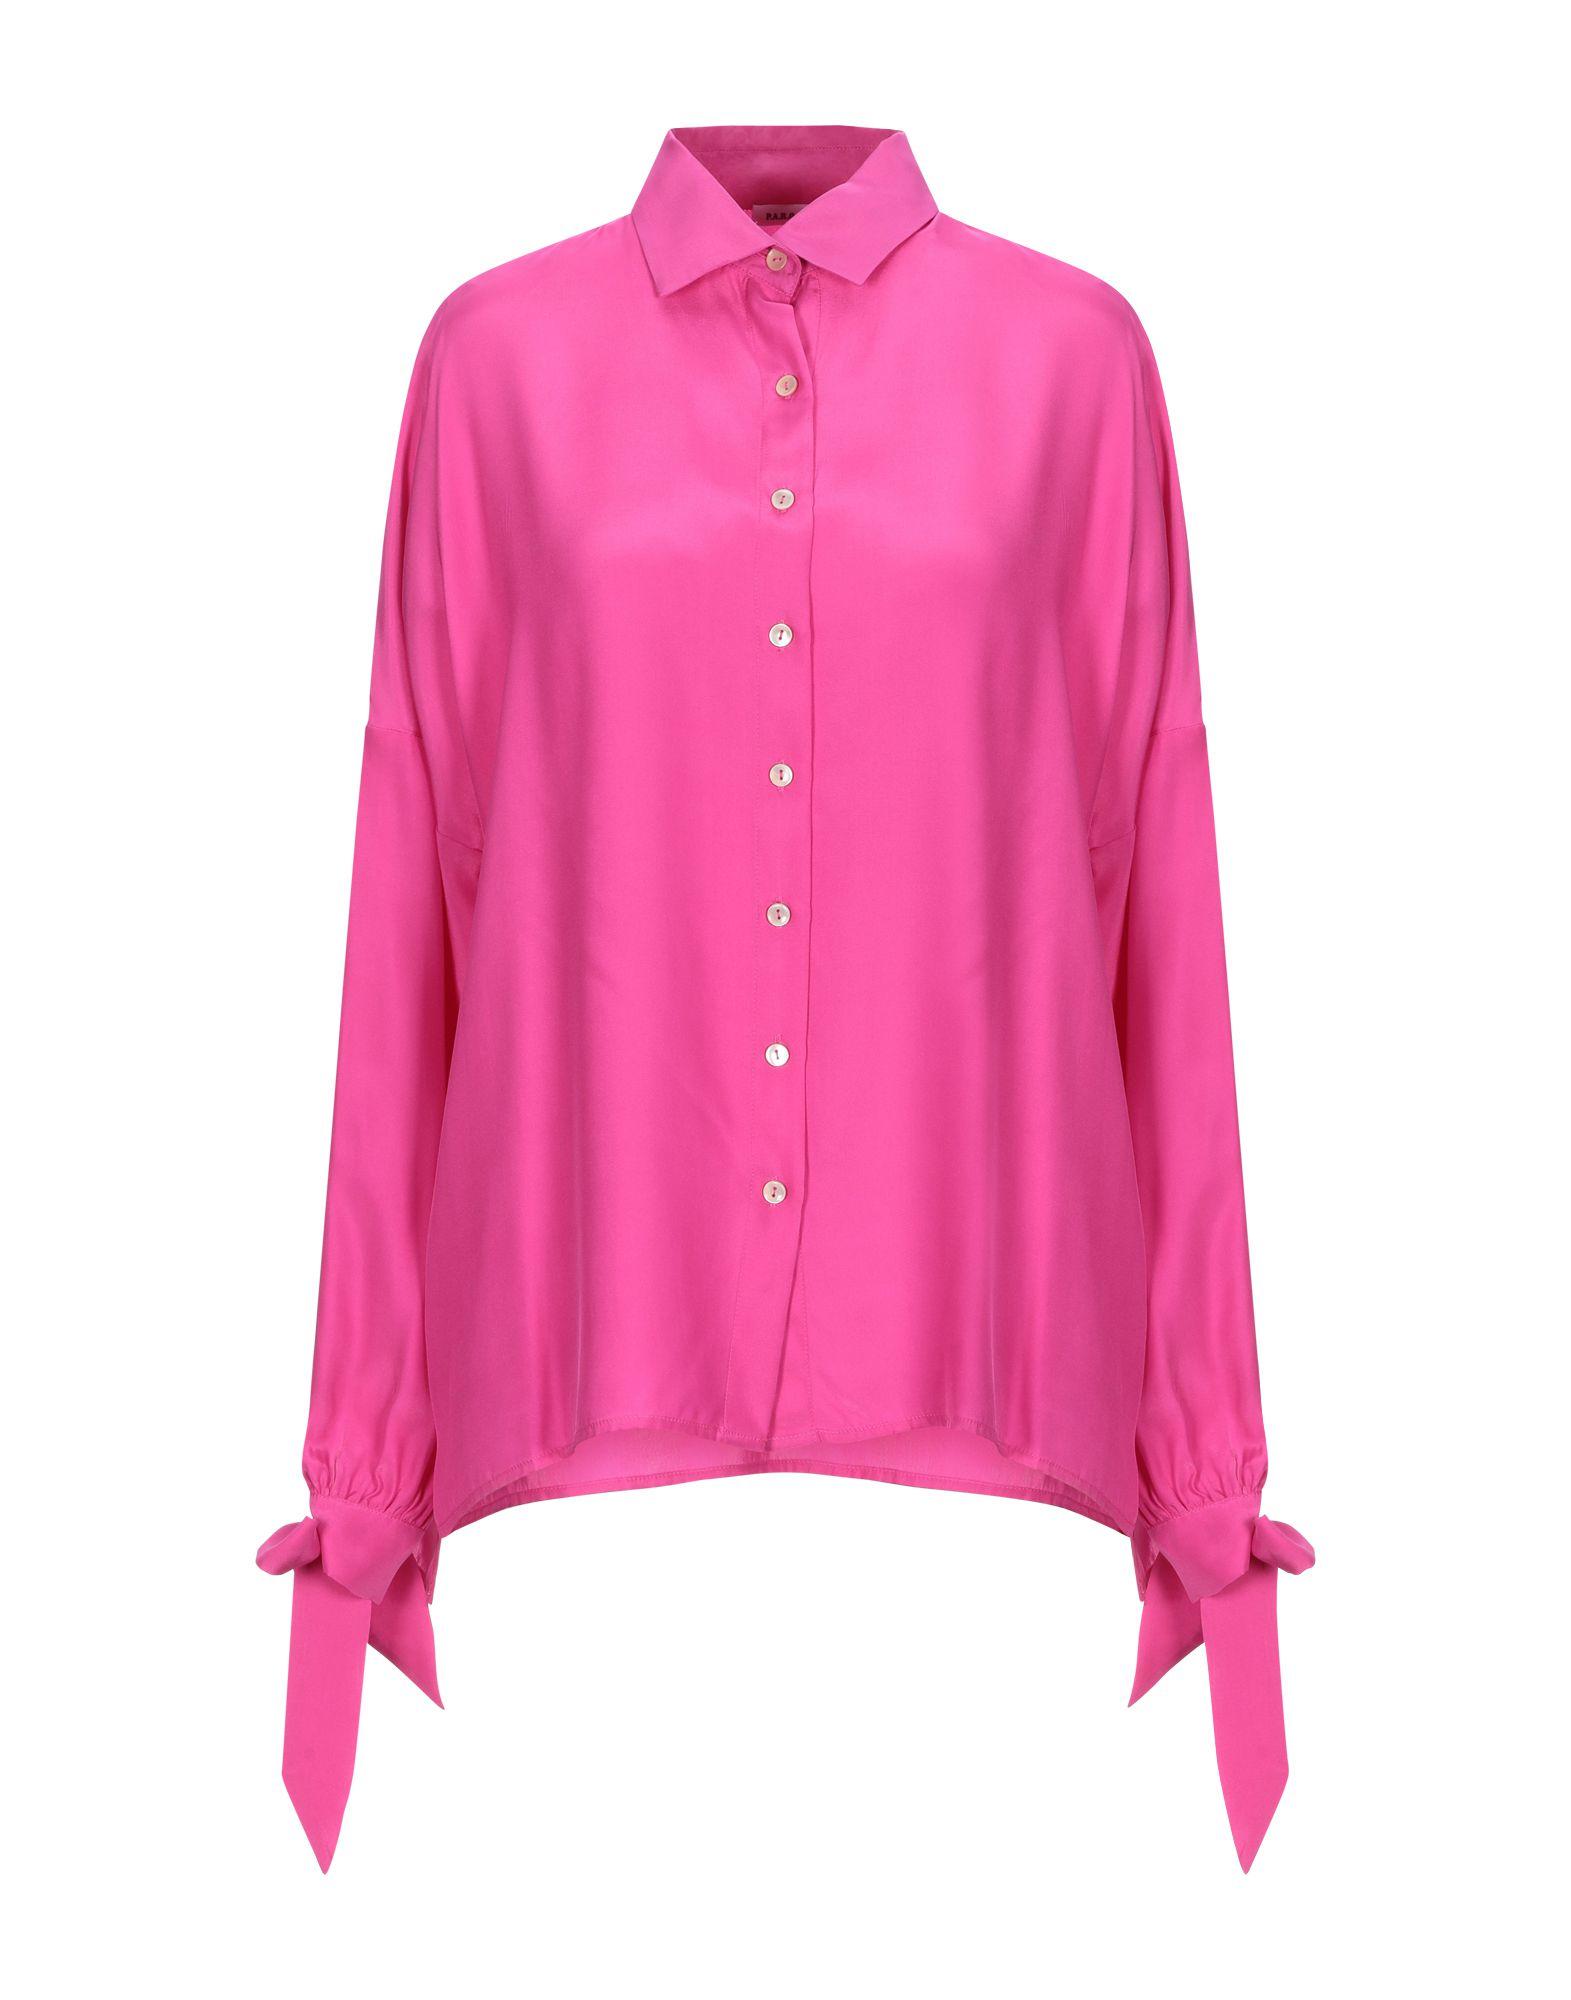 P.A.R.O.S.H. Satin Shirt in Fuchsia (Pink) - Lyst